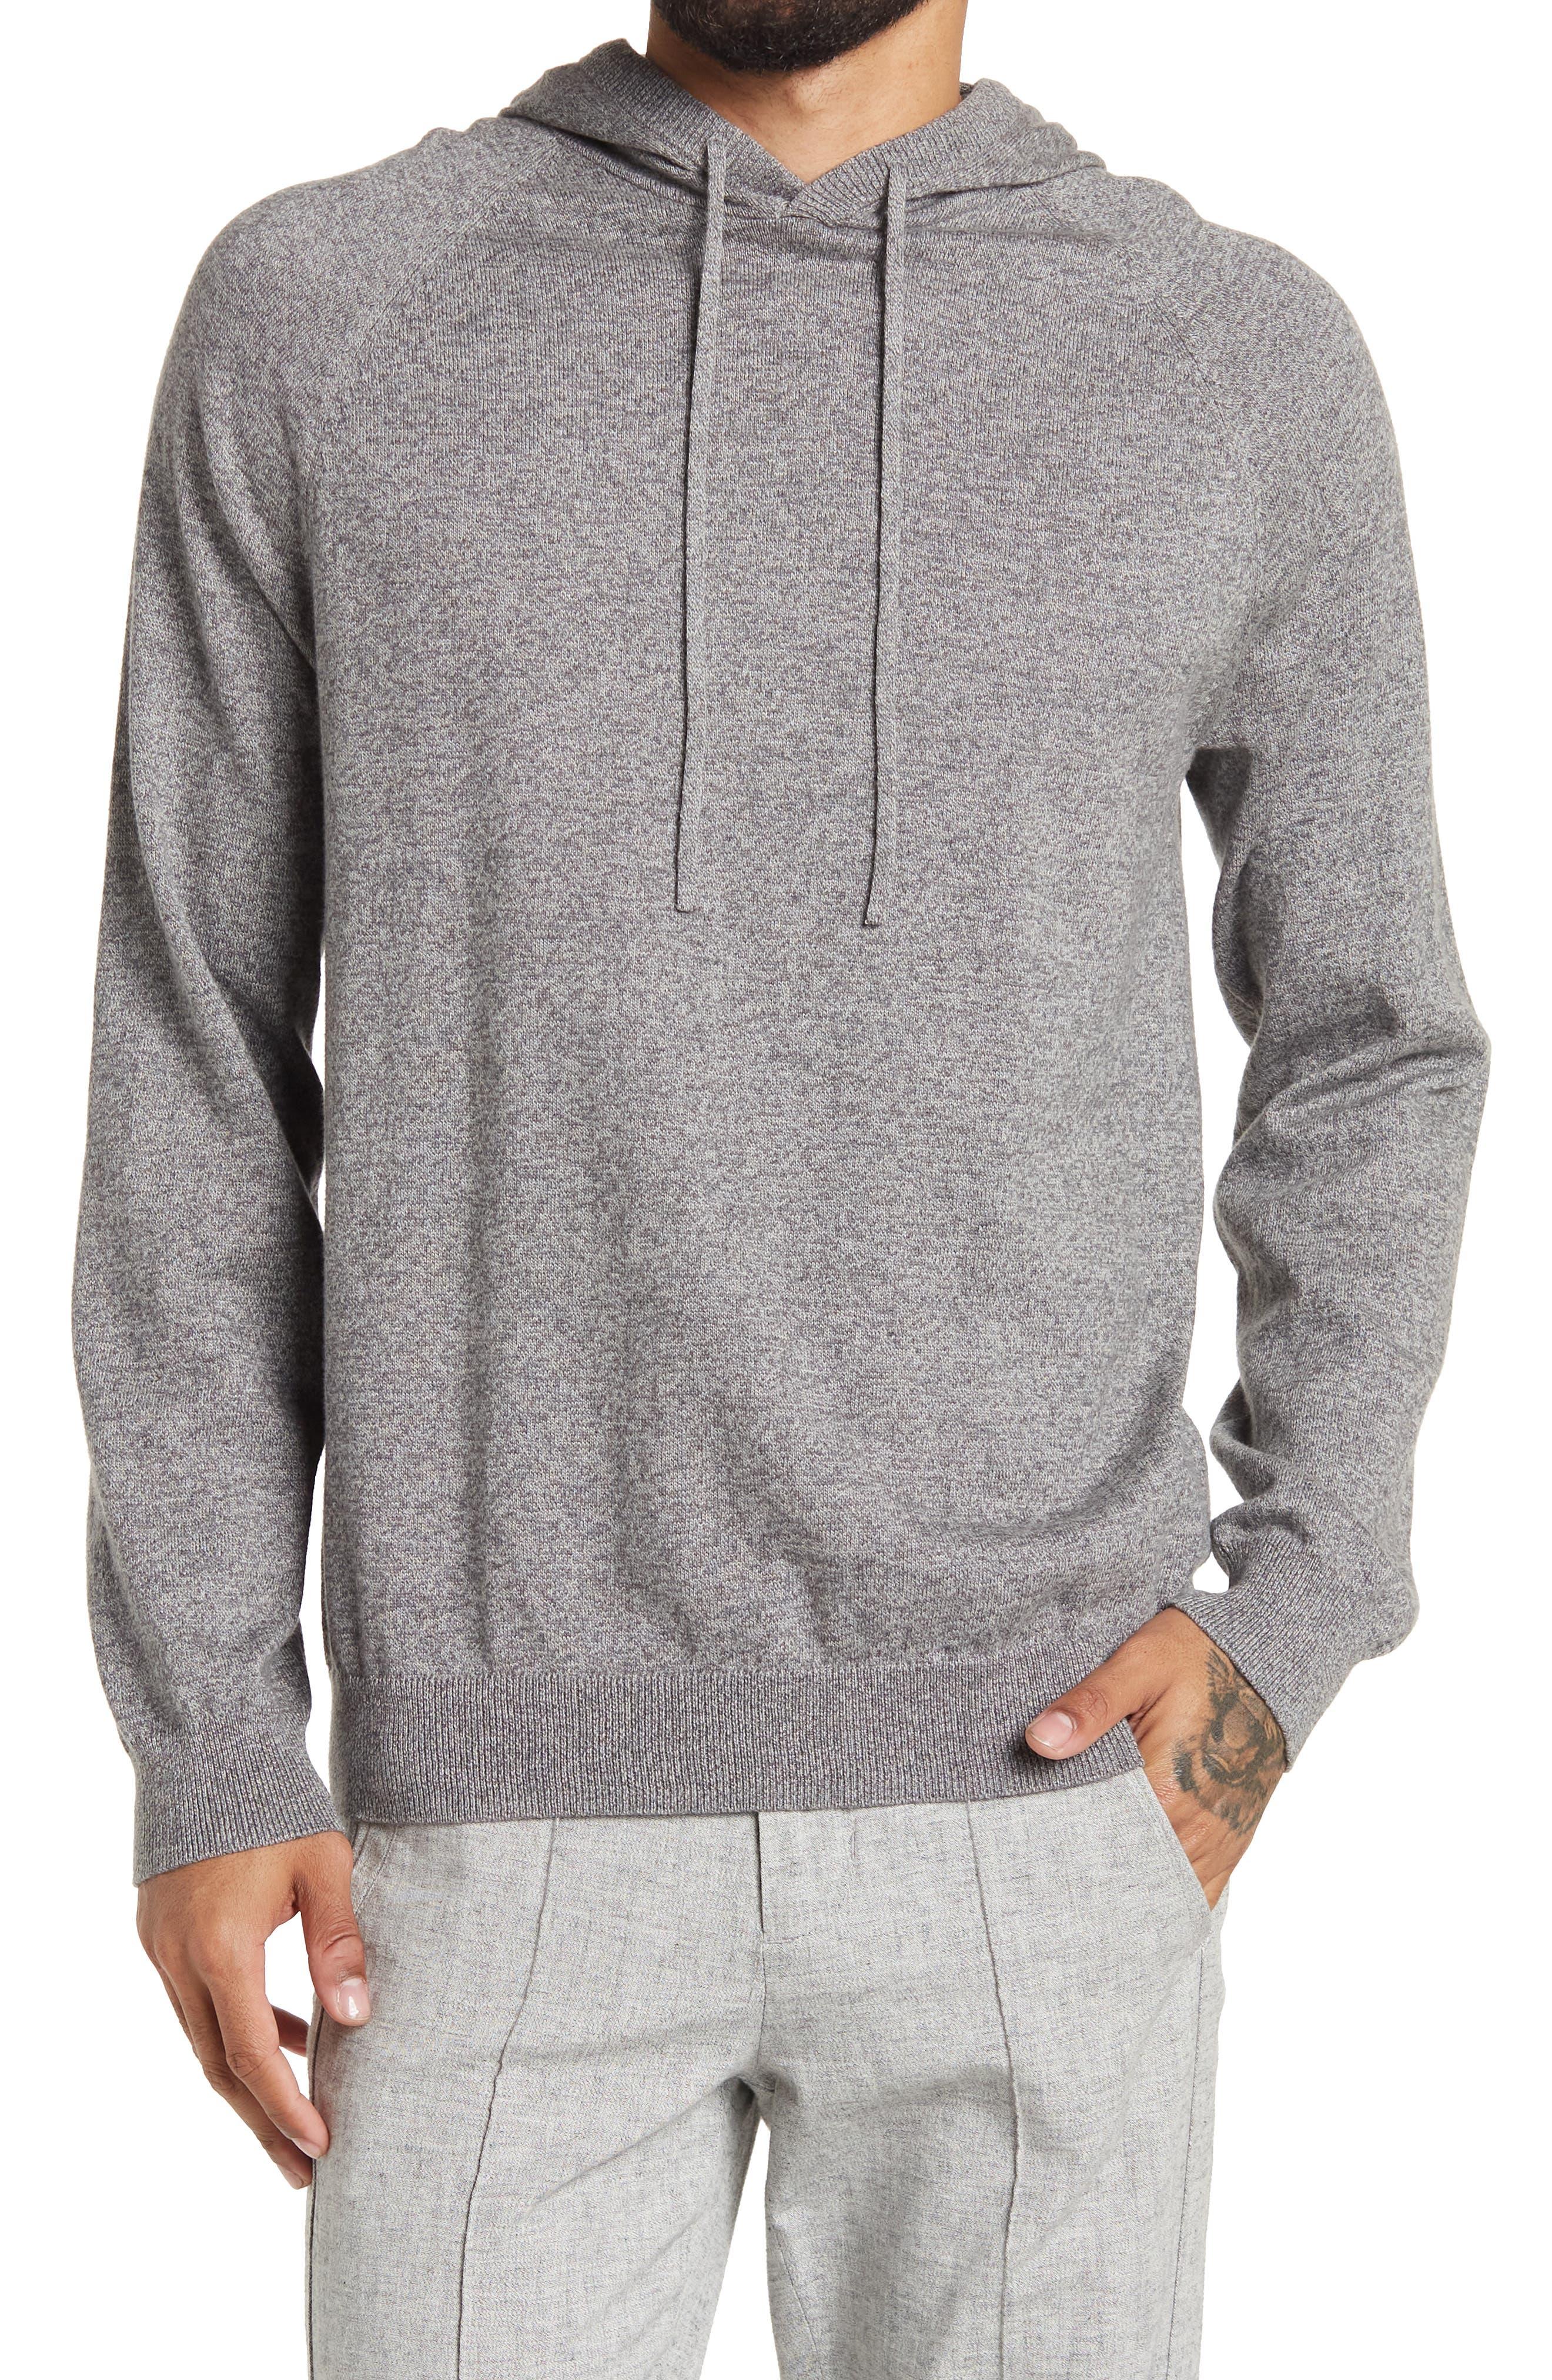 Reed Jacquard Crew Sweater - Jaxen Grey - Men's Clothing in Minneapolis